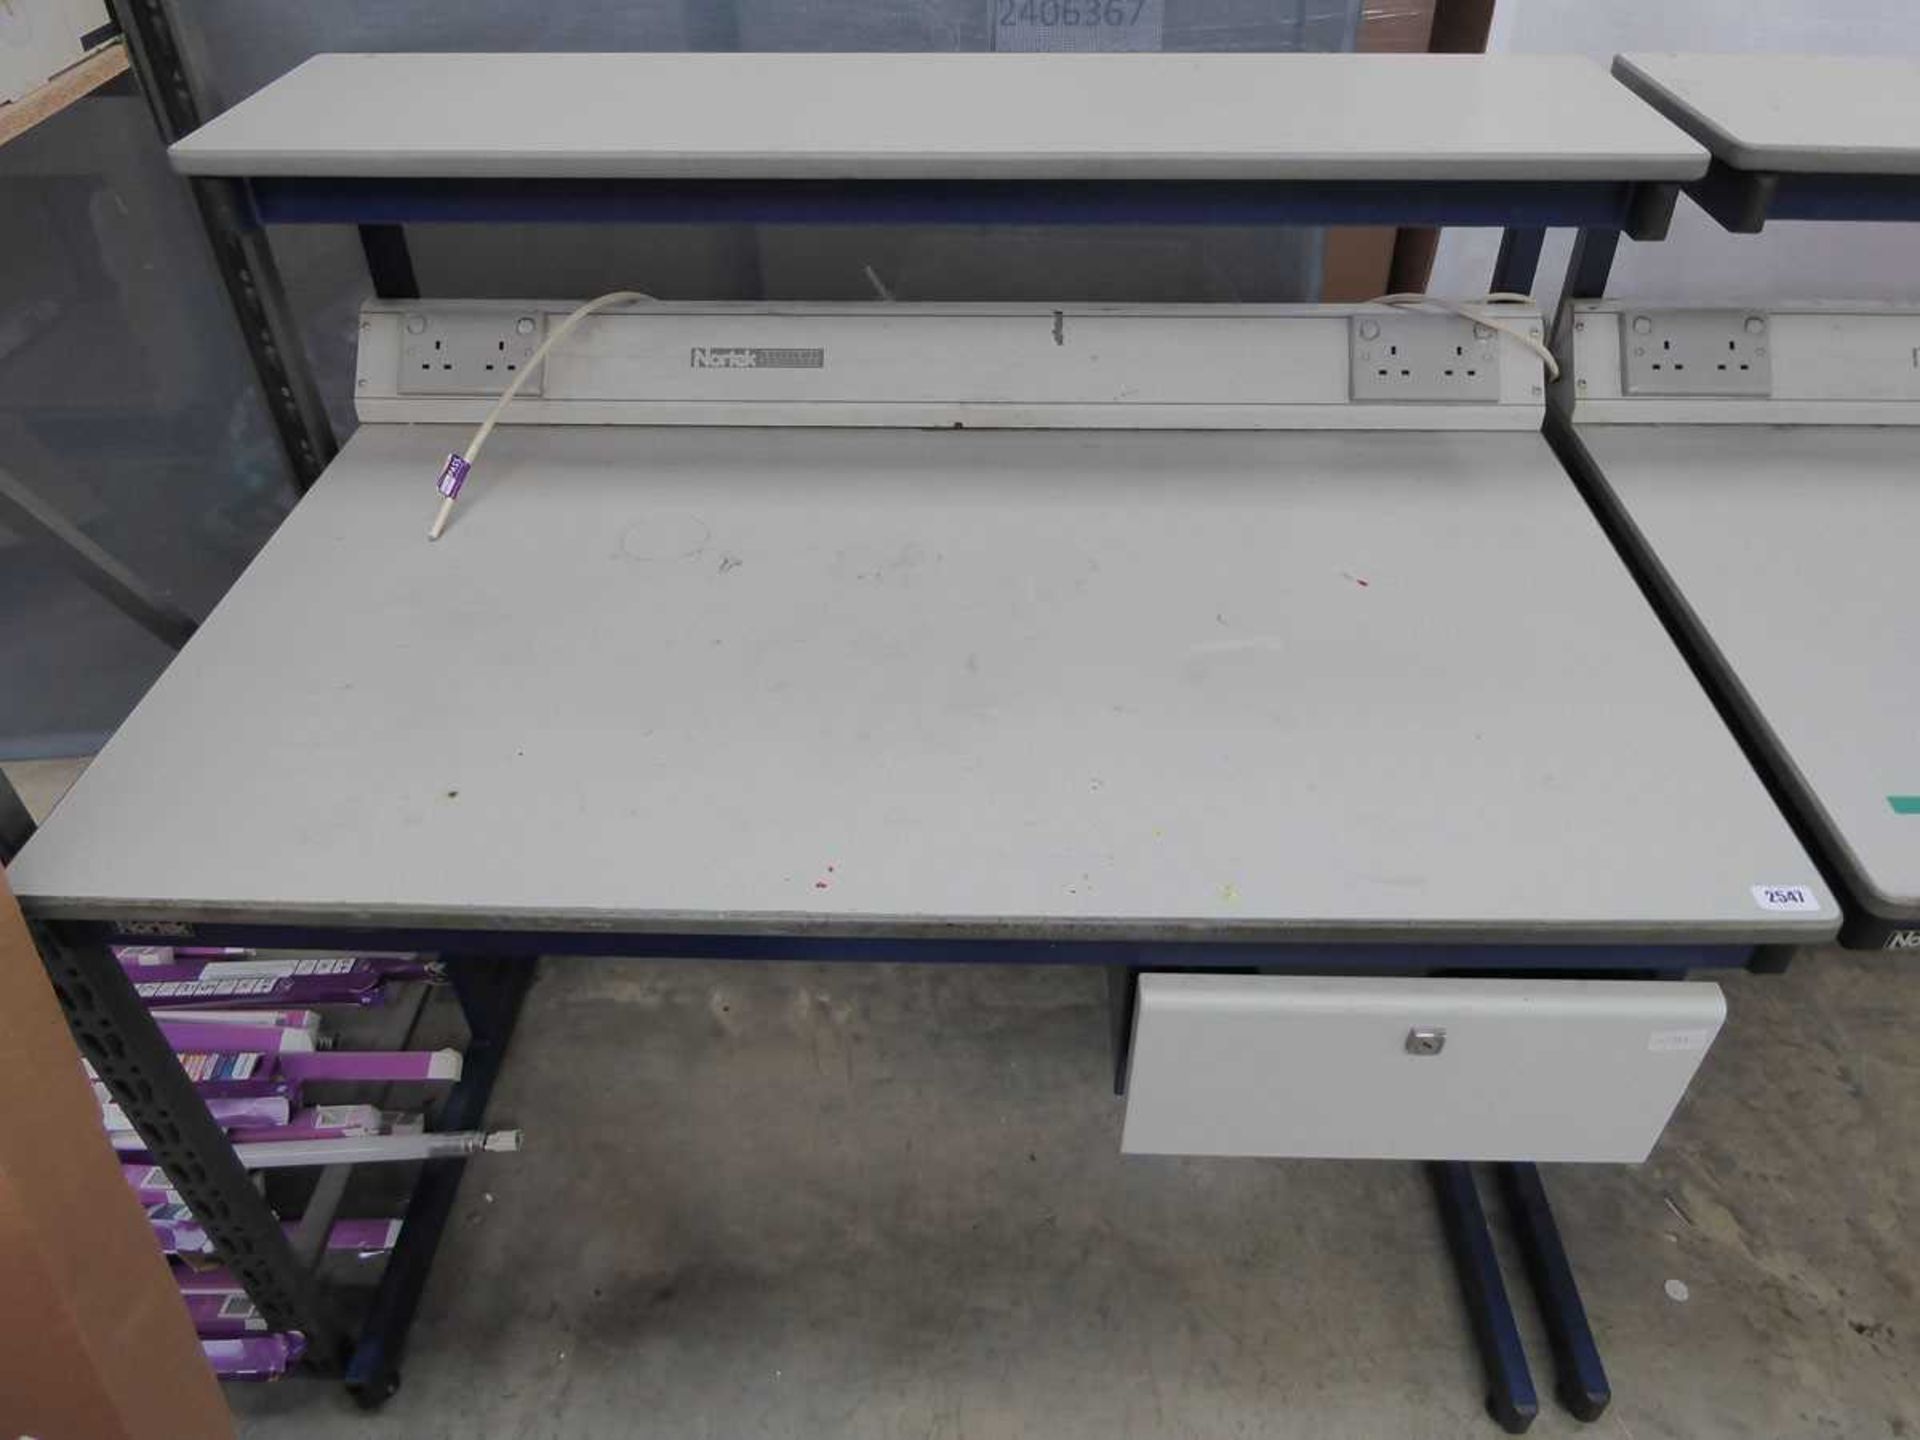 Nortek single drawer work bench with integral sockets and lighting